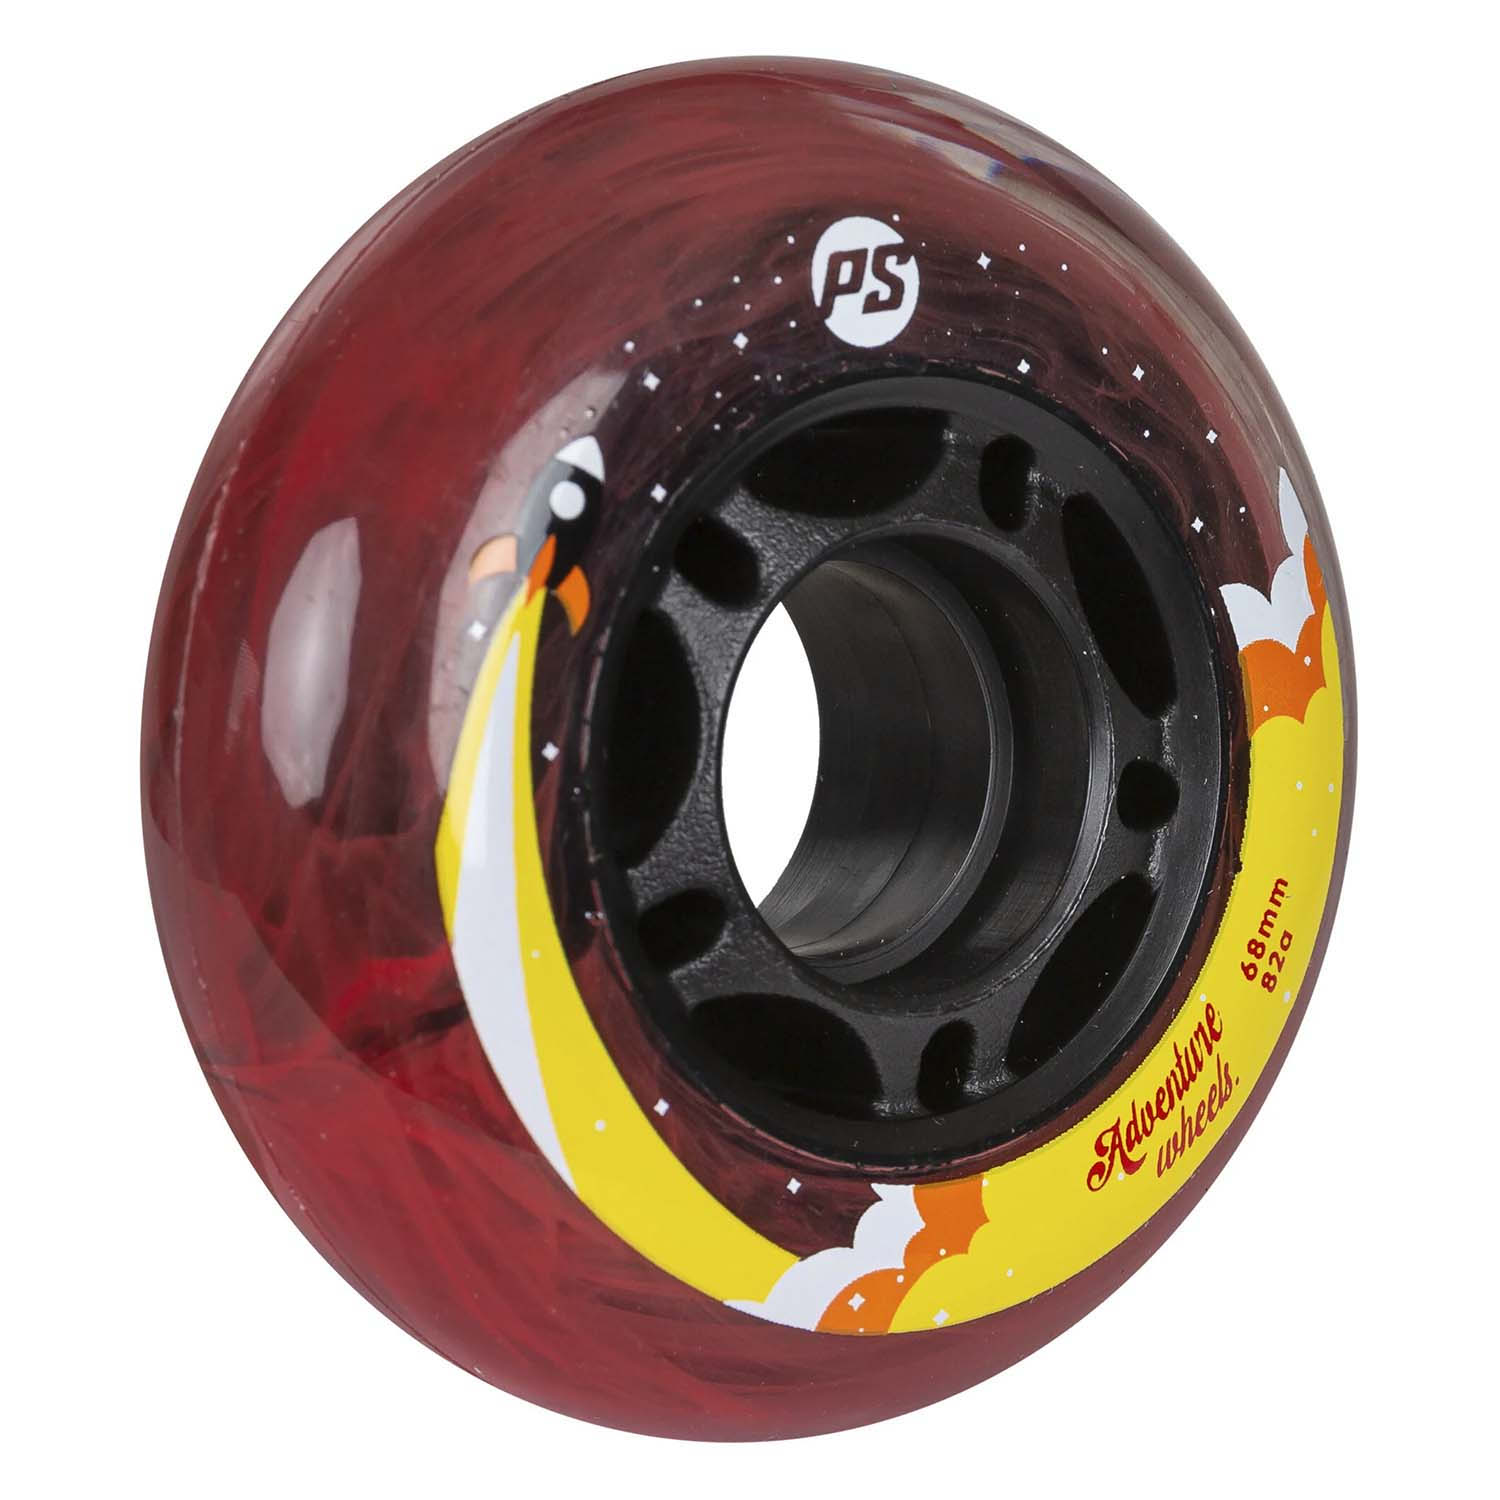 Комплект колёс для роликов Powerslide Adventure 68/82A, 4-pack Black/Red